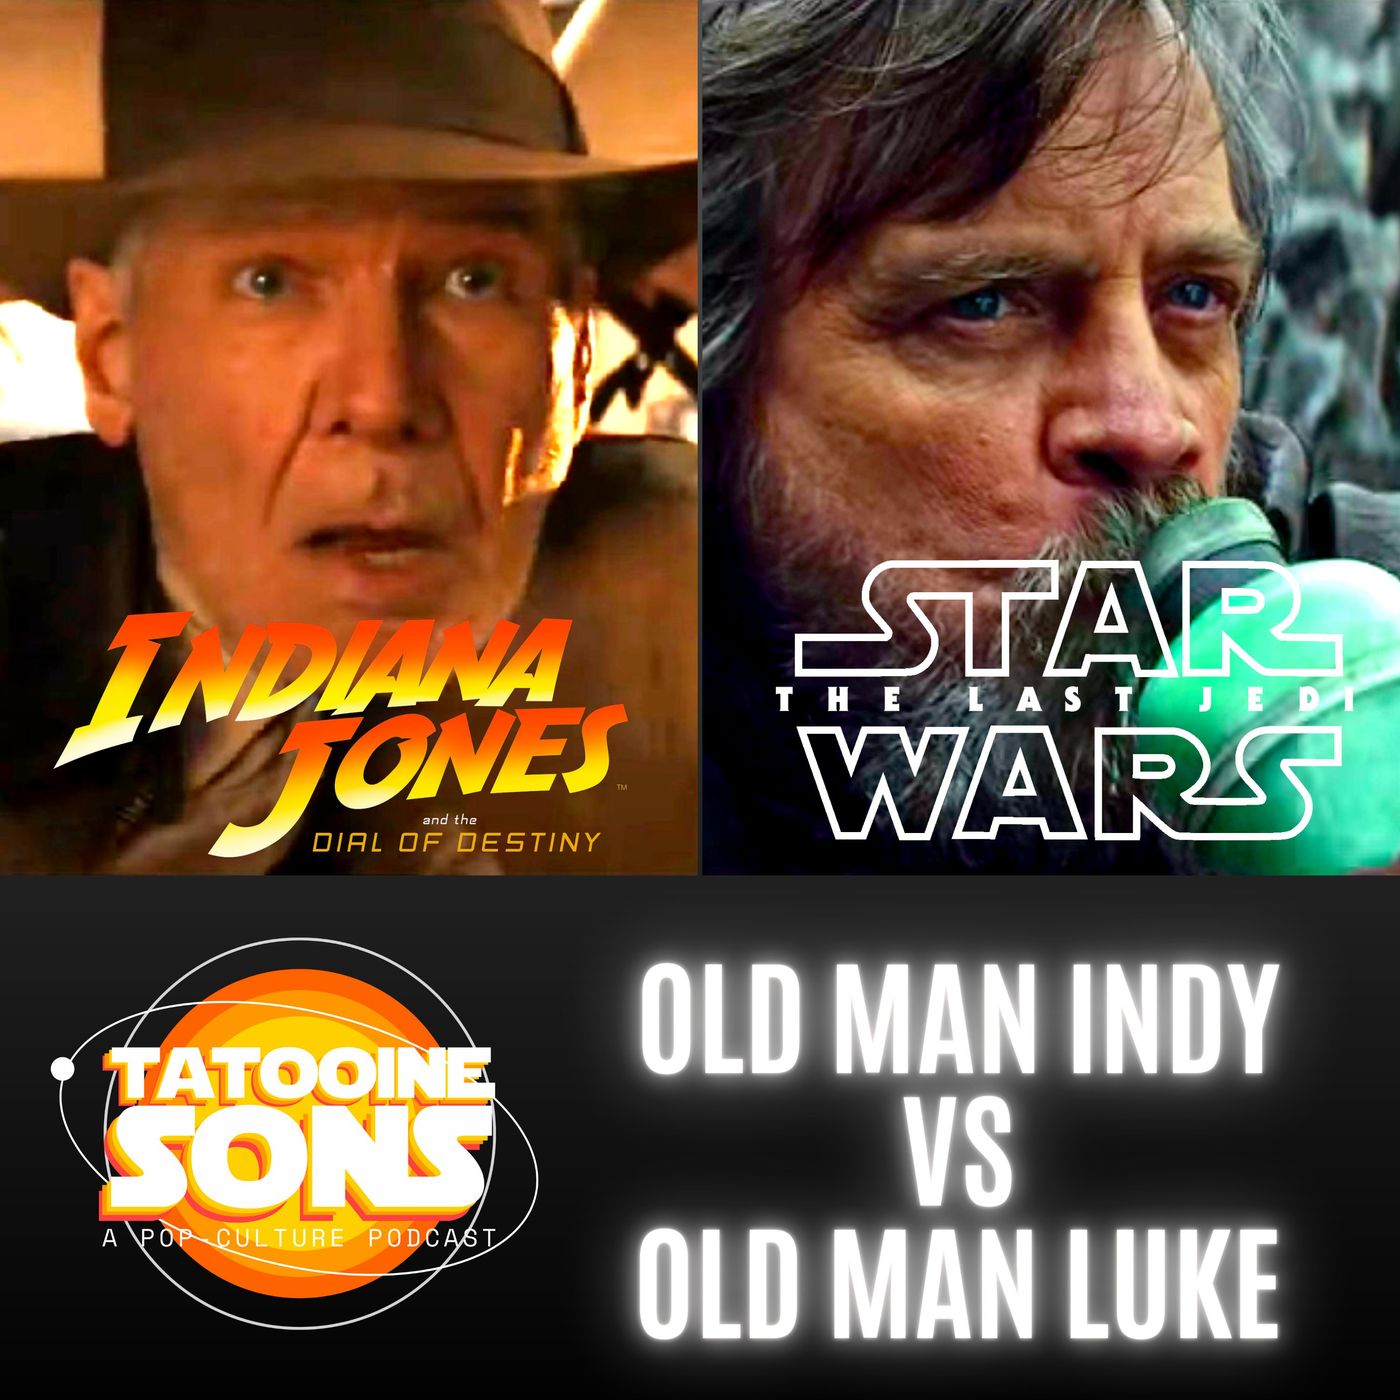 Old Man Indy vs Old Man Luke